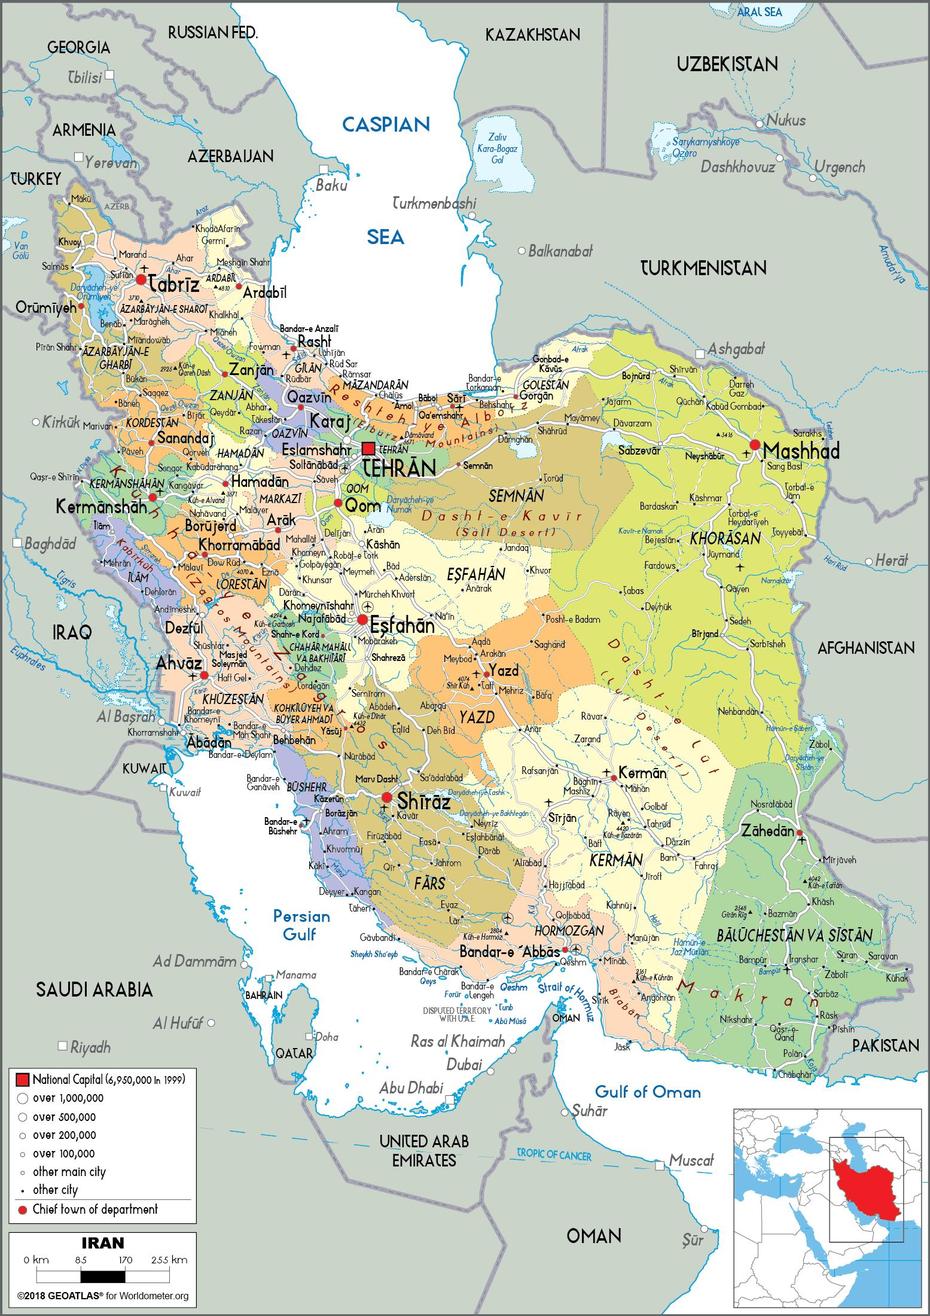 Iran Satellite Images, Iran Farm, Iran , Evaz, Iran